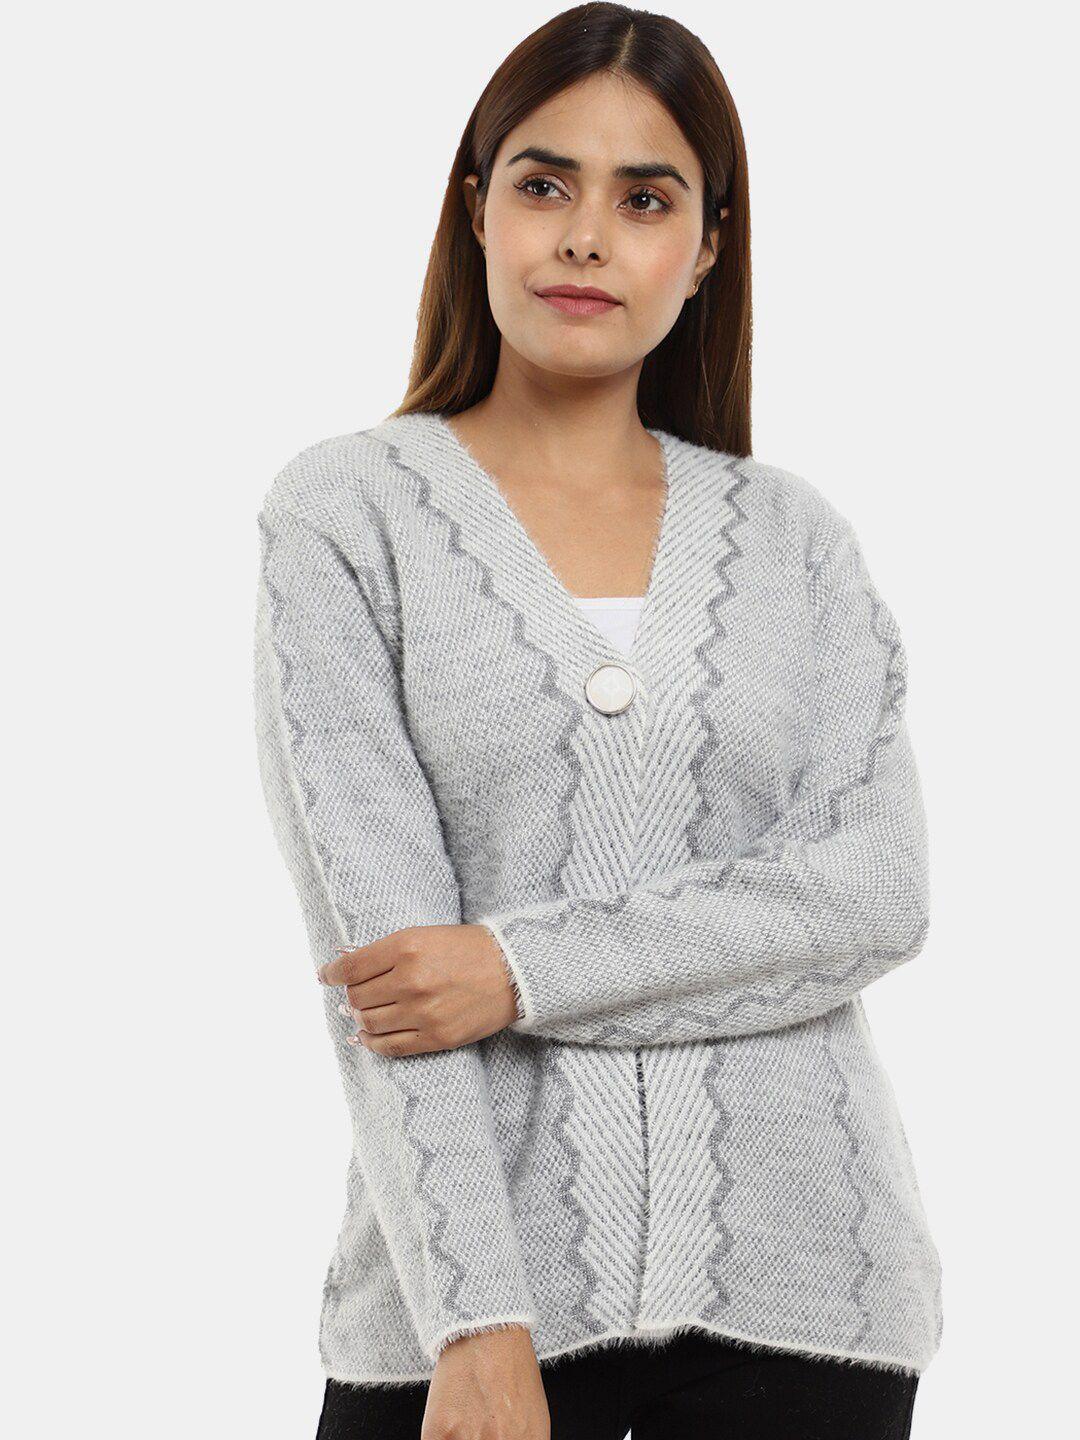 v-mart women grey sweatshirt